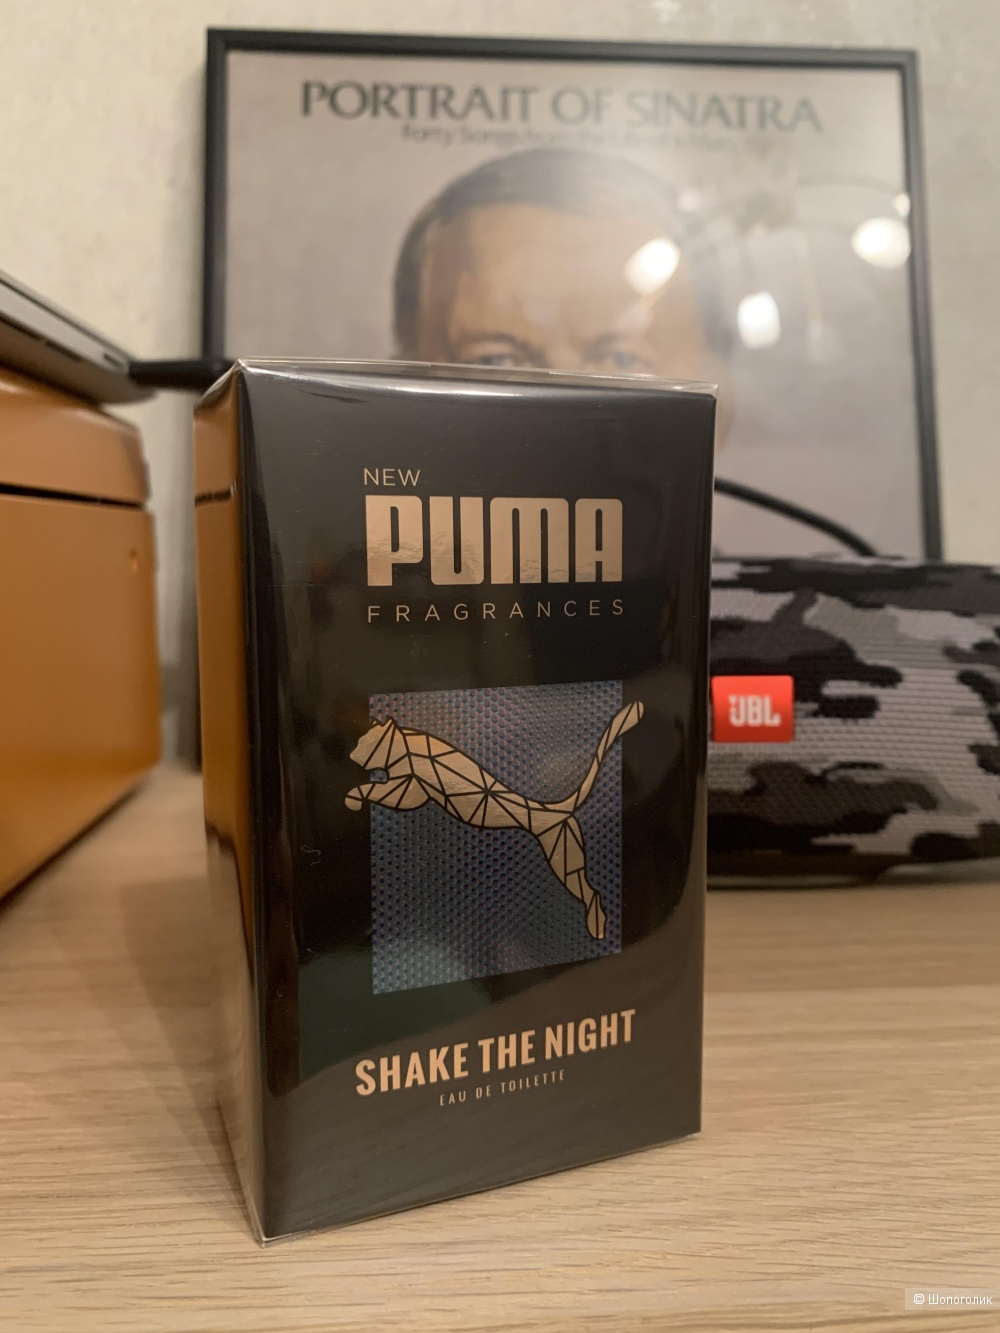 Туалетная вода Puma Shake the night, 50 ml